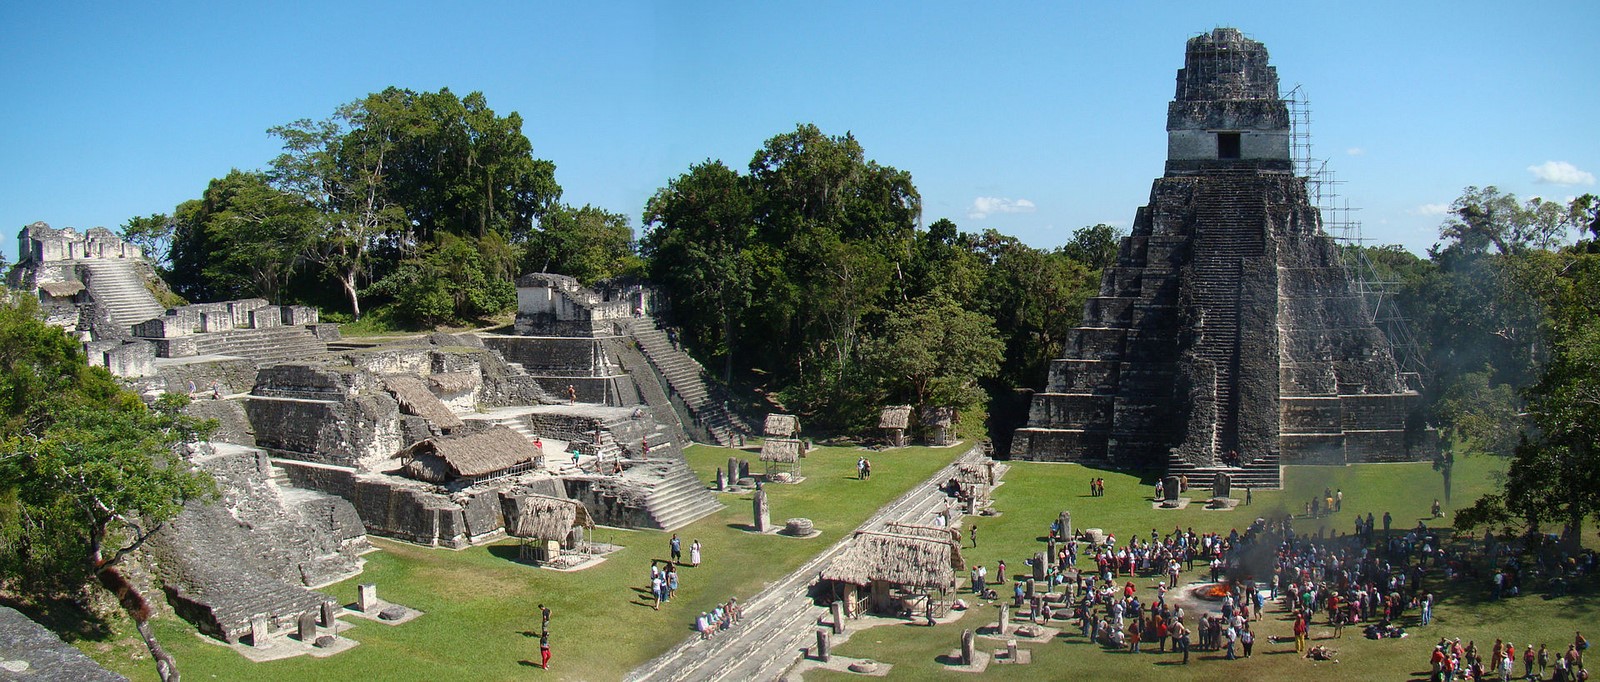 Lost in Time Tikal, Guatemala - Sheet1